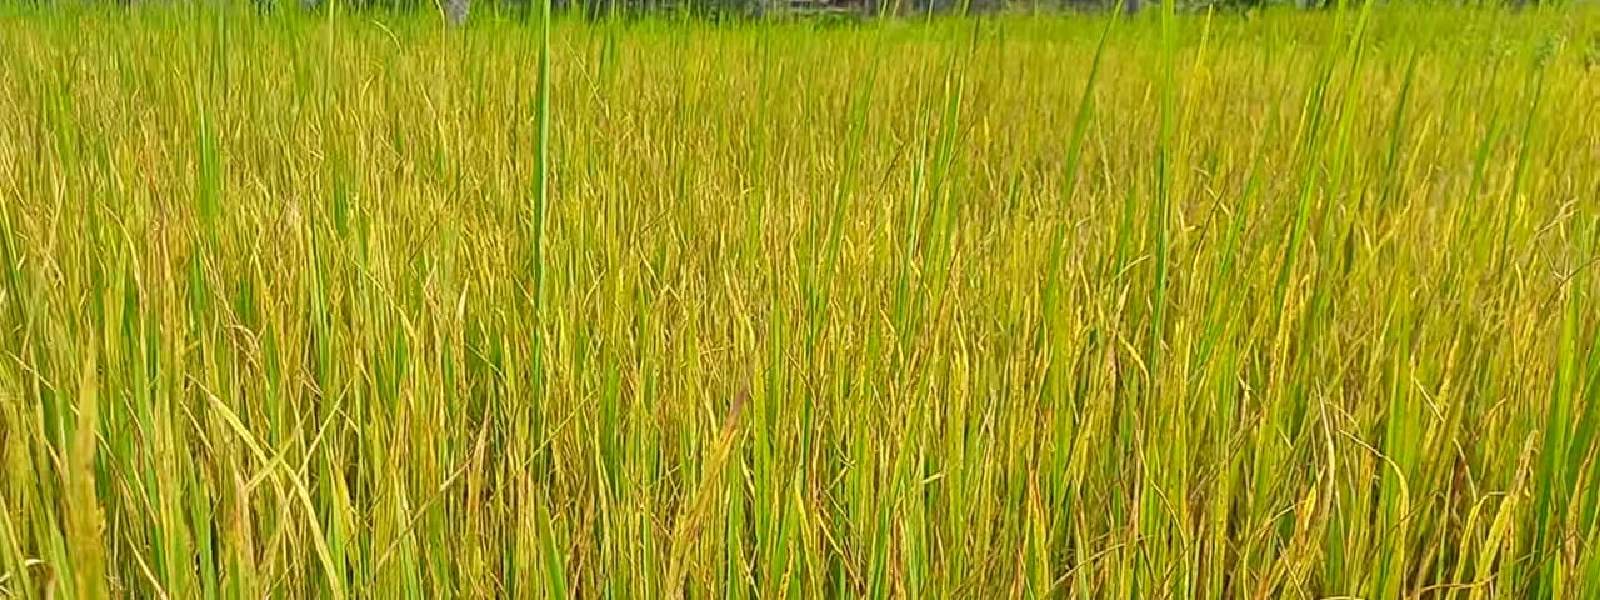 Paddy farmers helpless as rice plants turn yellow